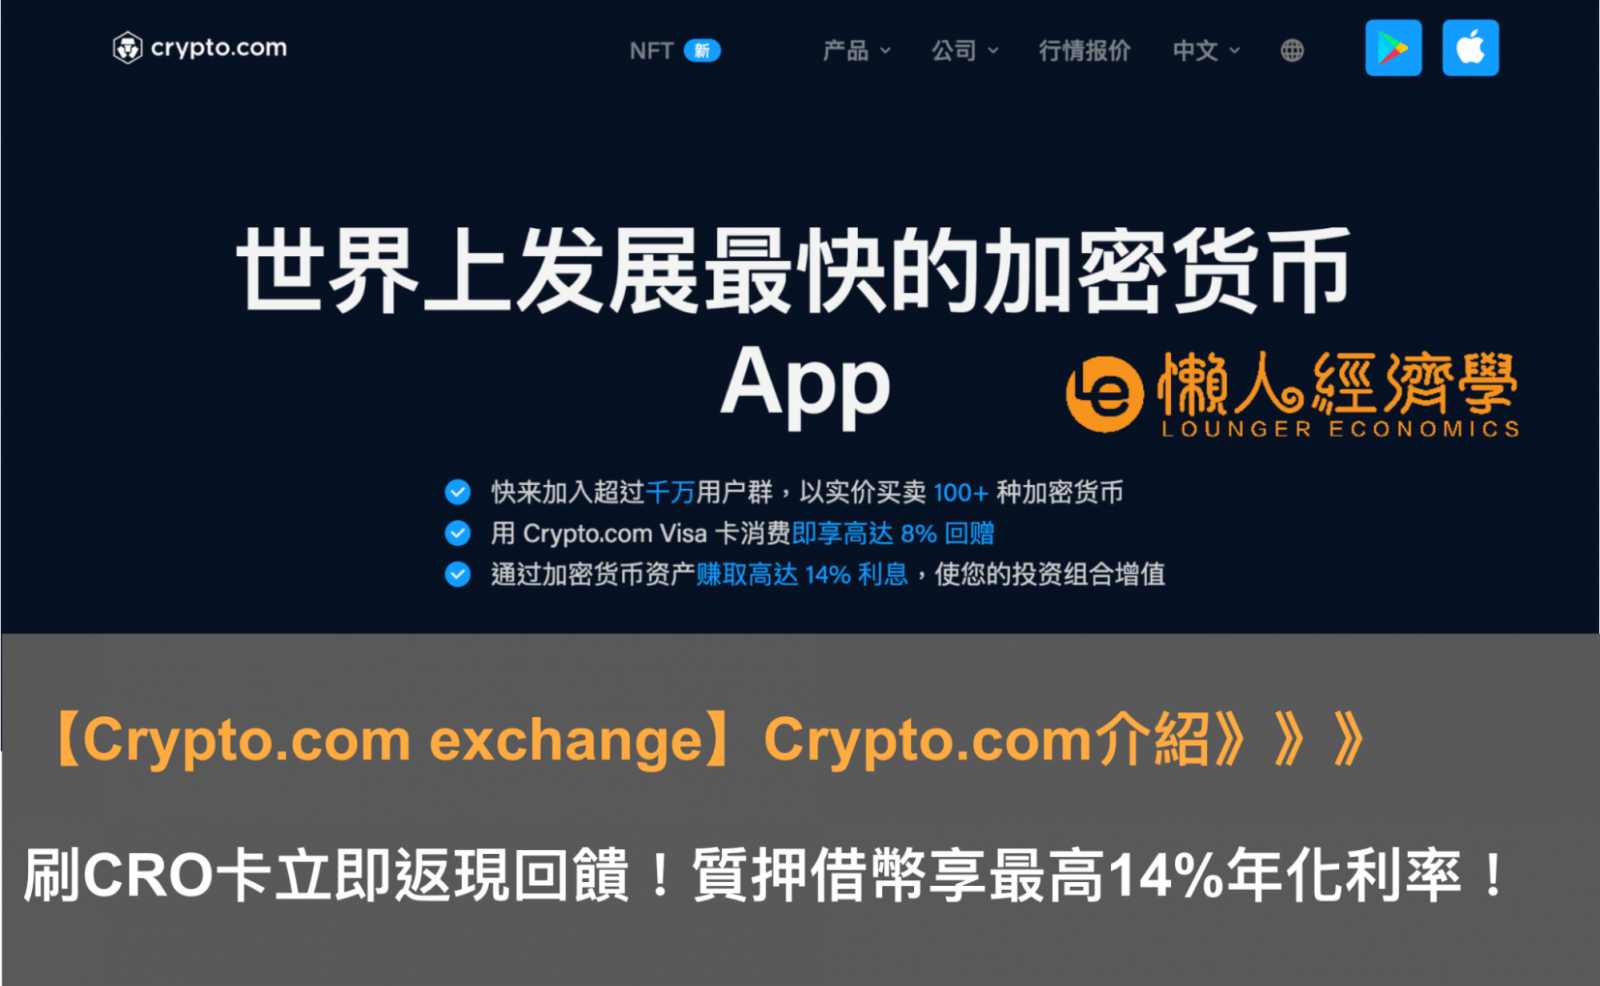 【Crypto.com exchange】Crypto.com介紹：刷CRO卡立即返現回饋！質押借幣享最高14%年化利率！